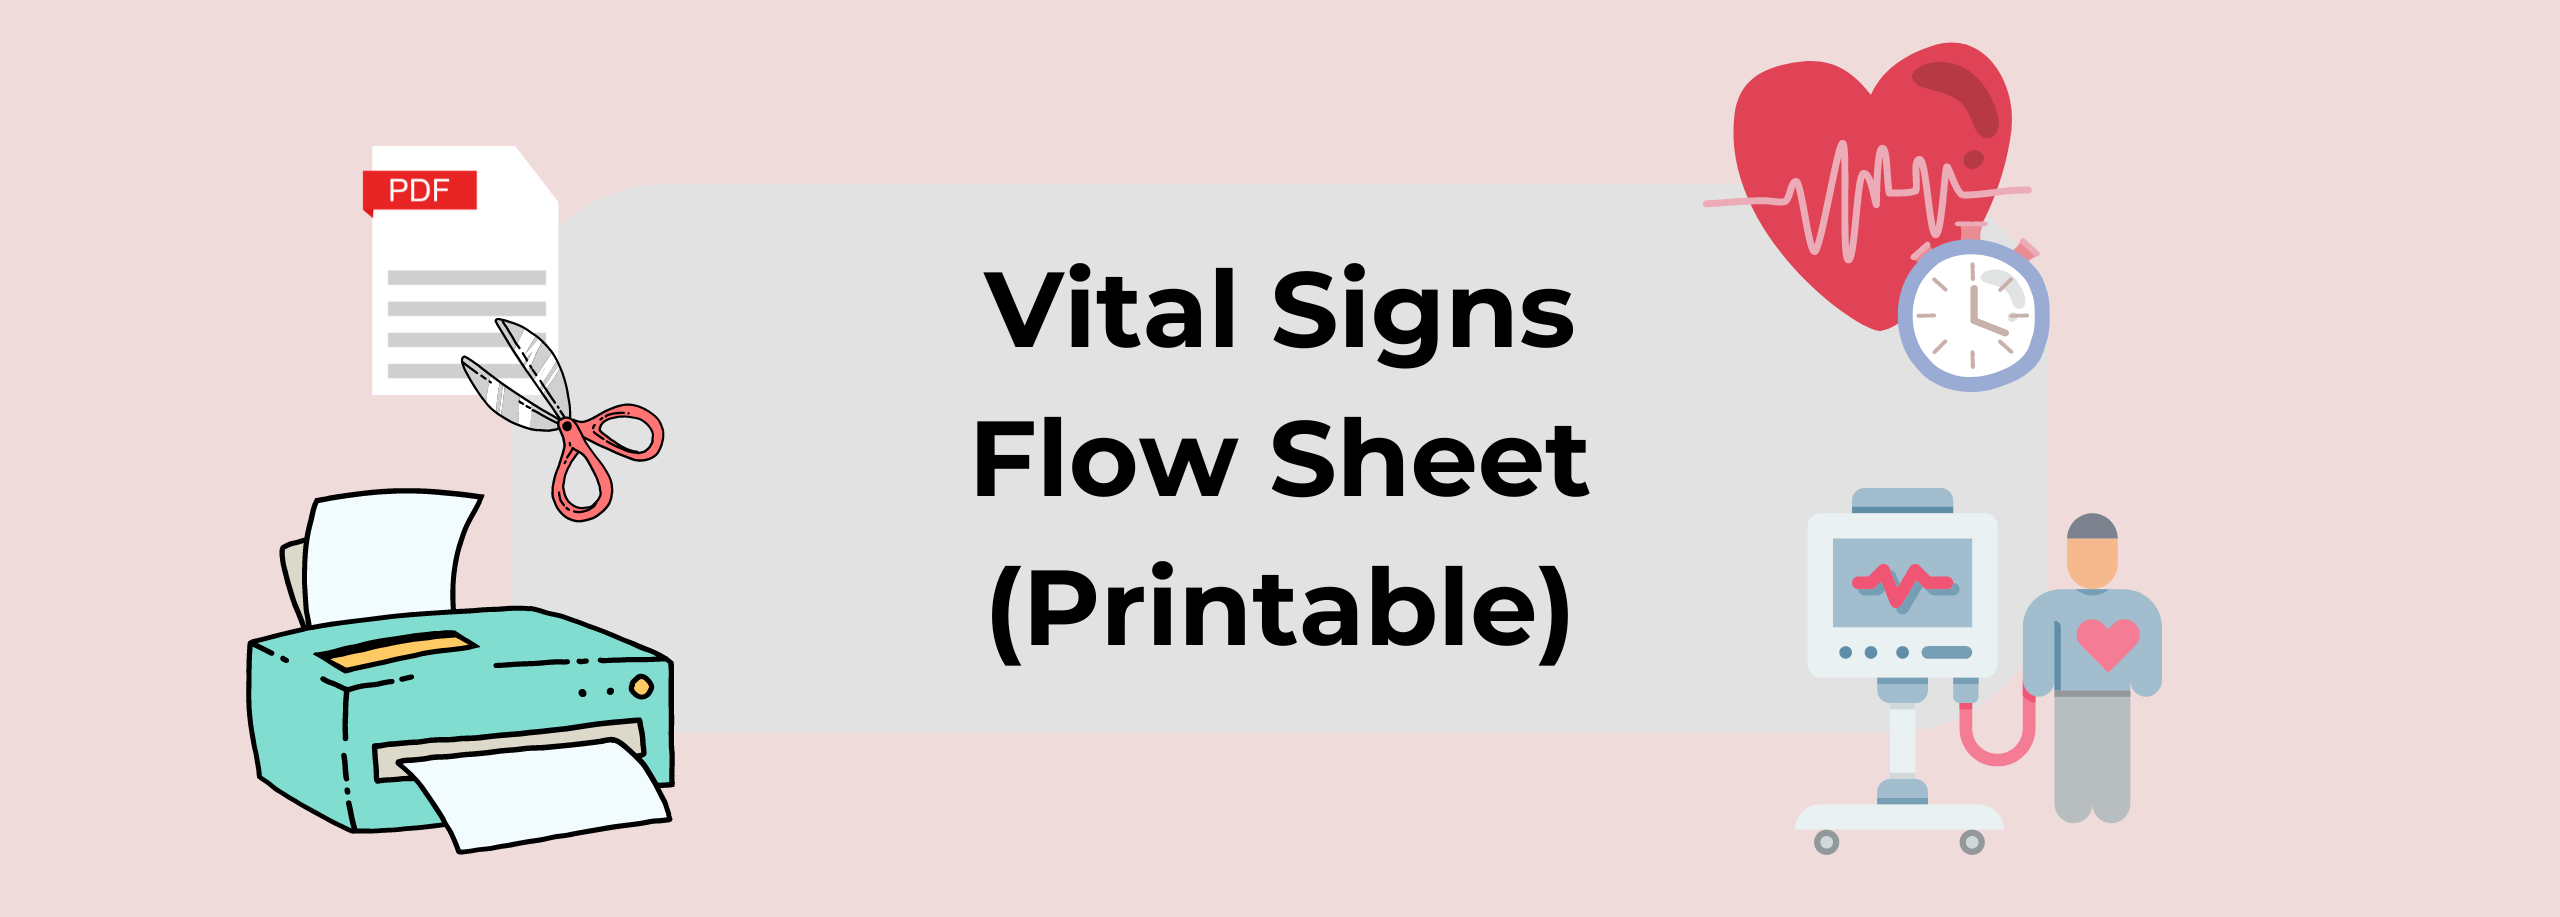 printable vital signs flow sheet